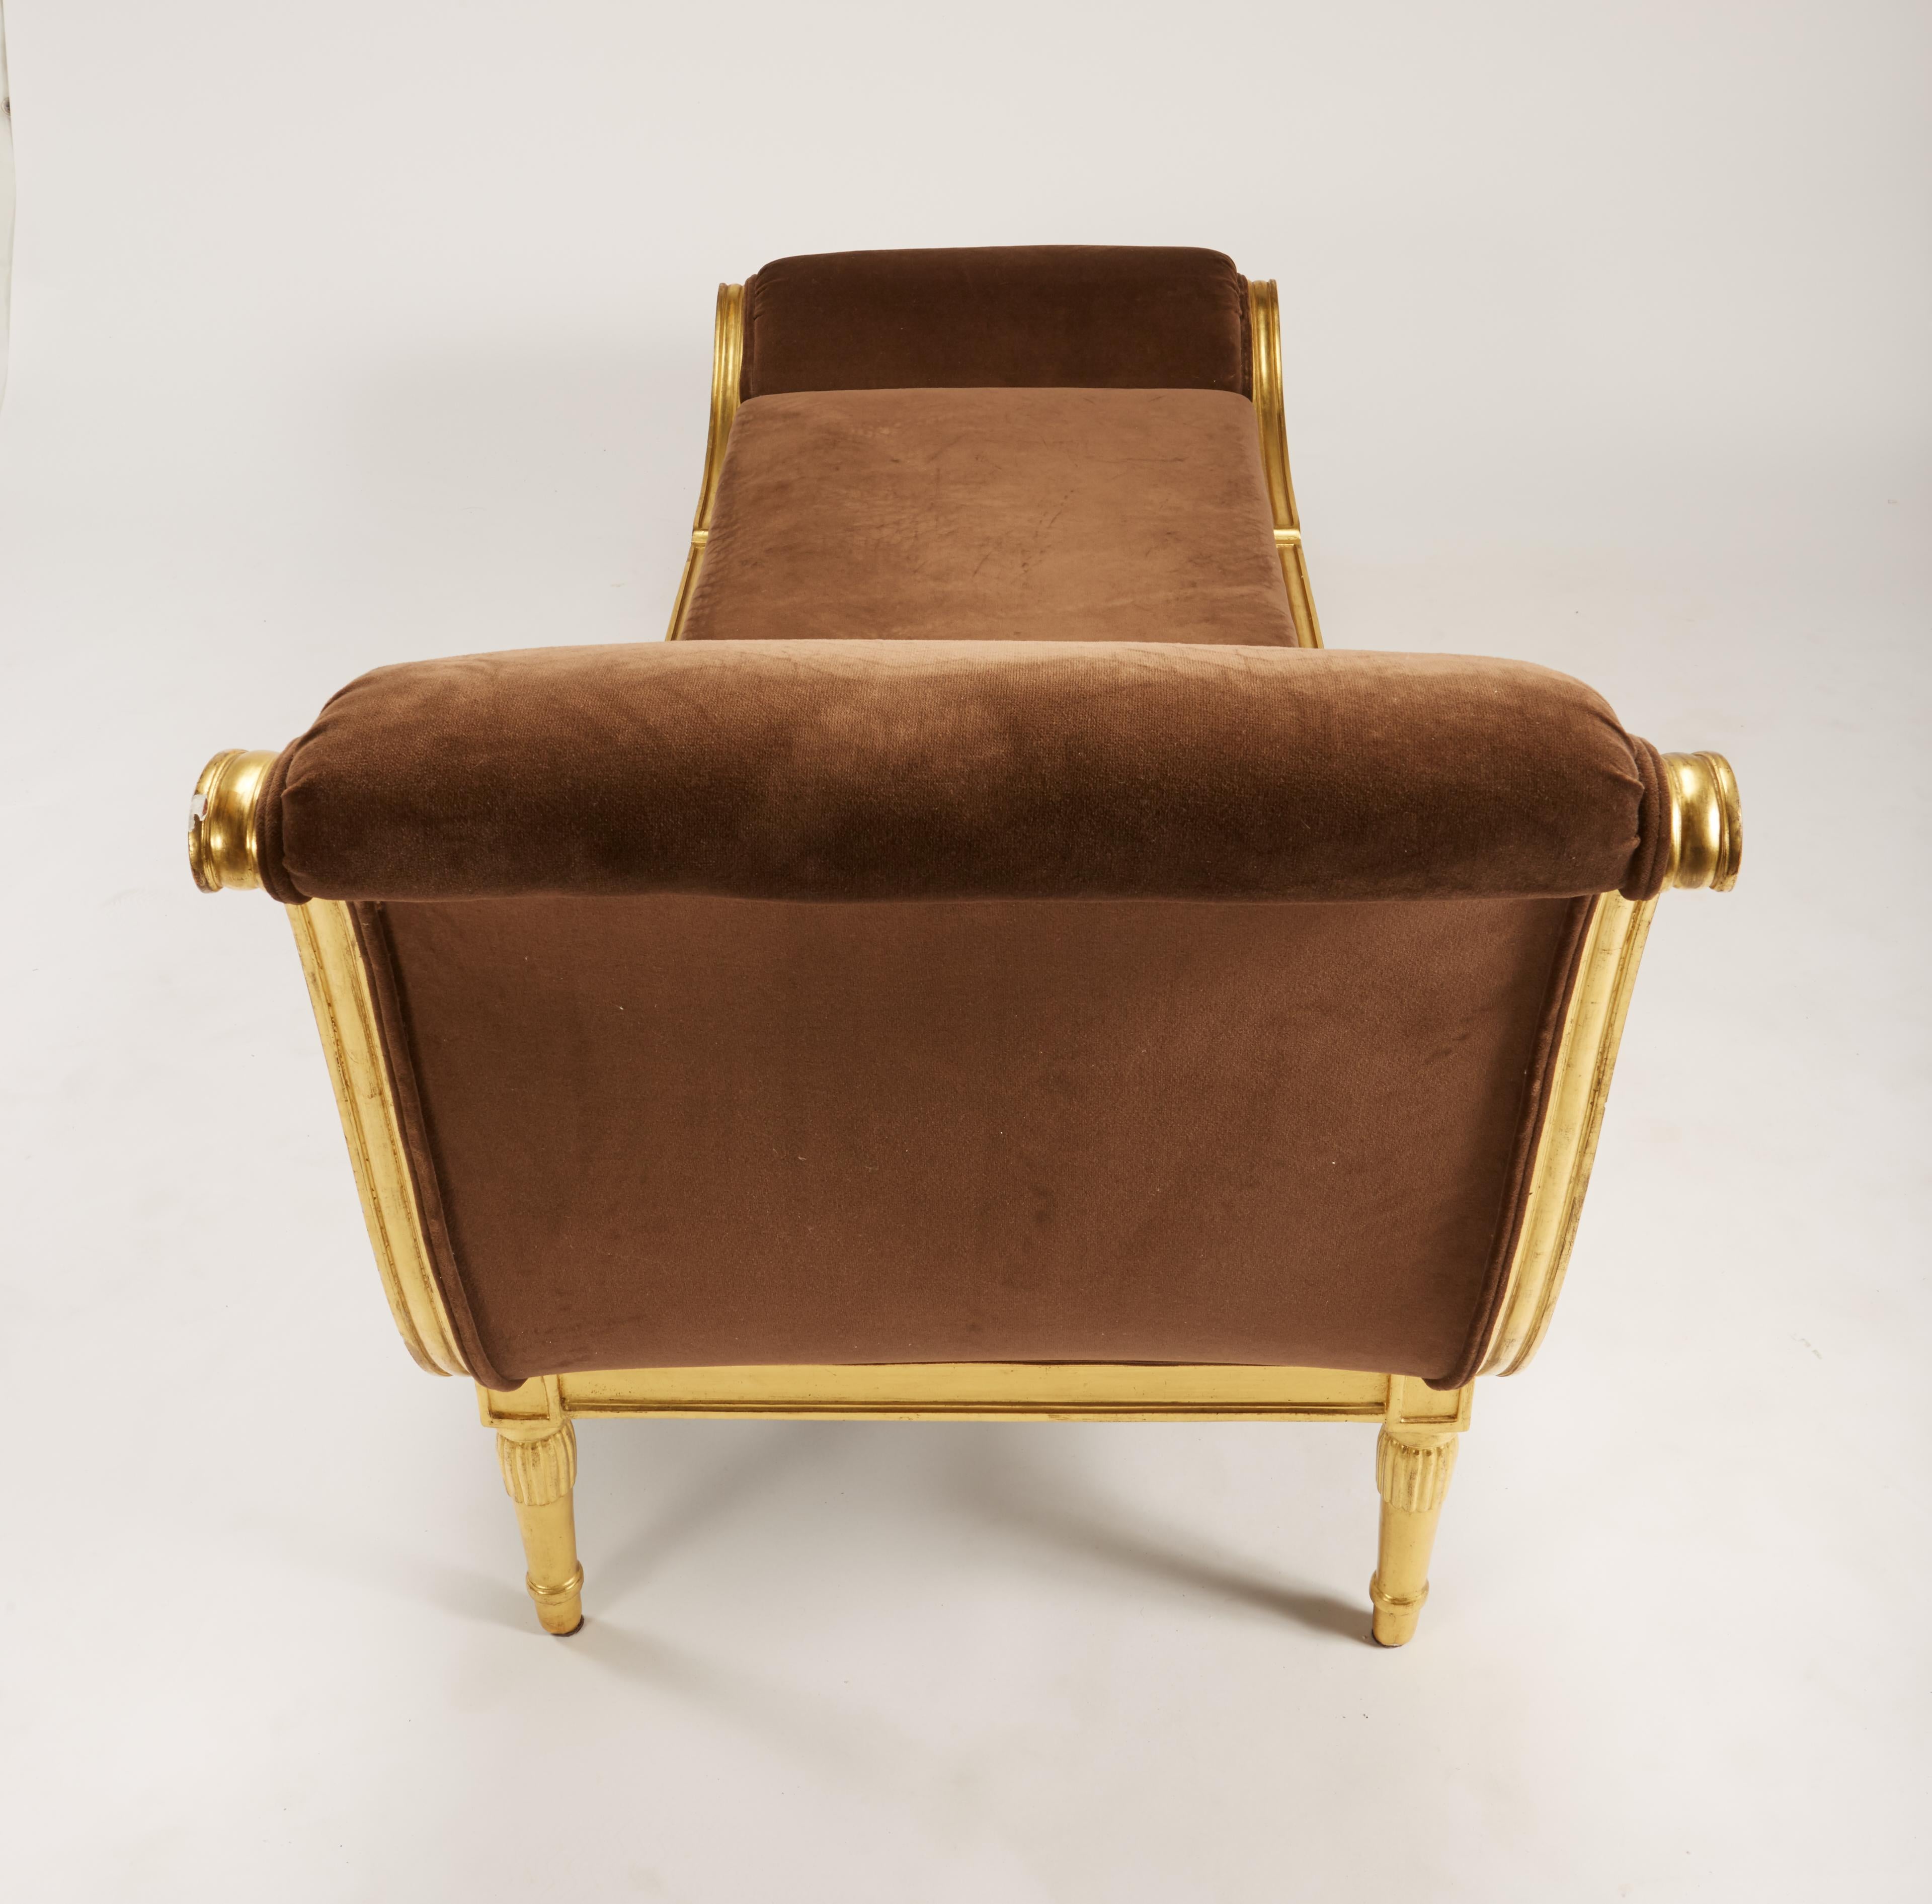 Rare 1920s French Deco Giltwood Chaise by L'Atelier d'Art du Printemps For Sale 2